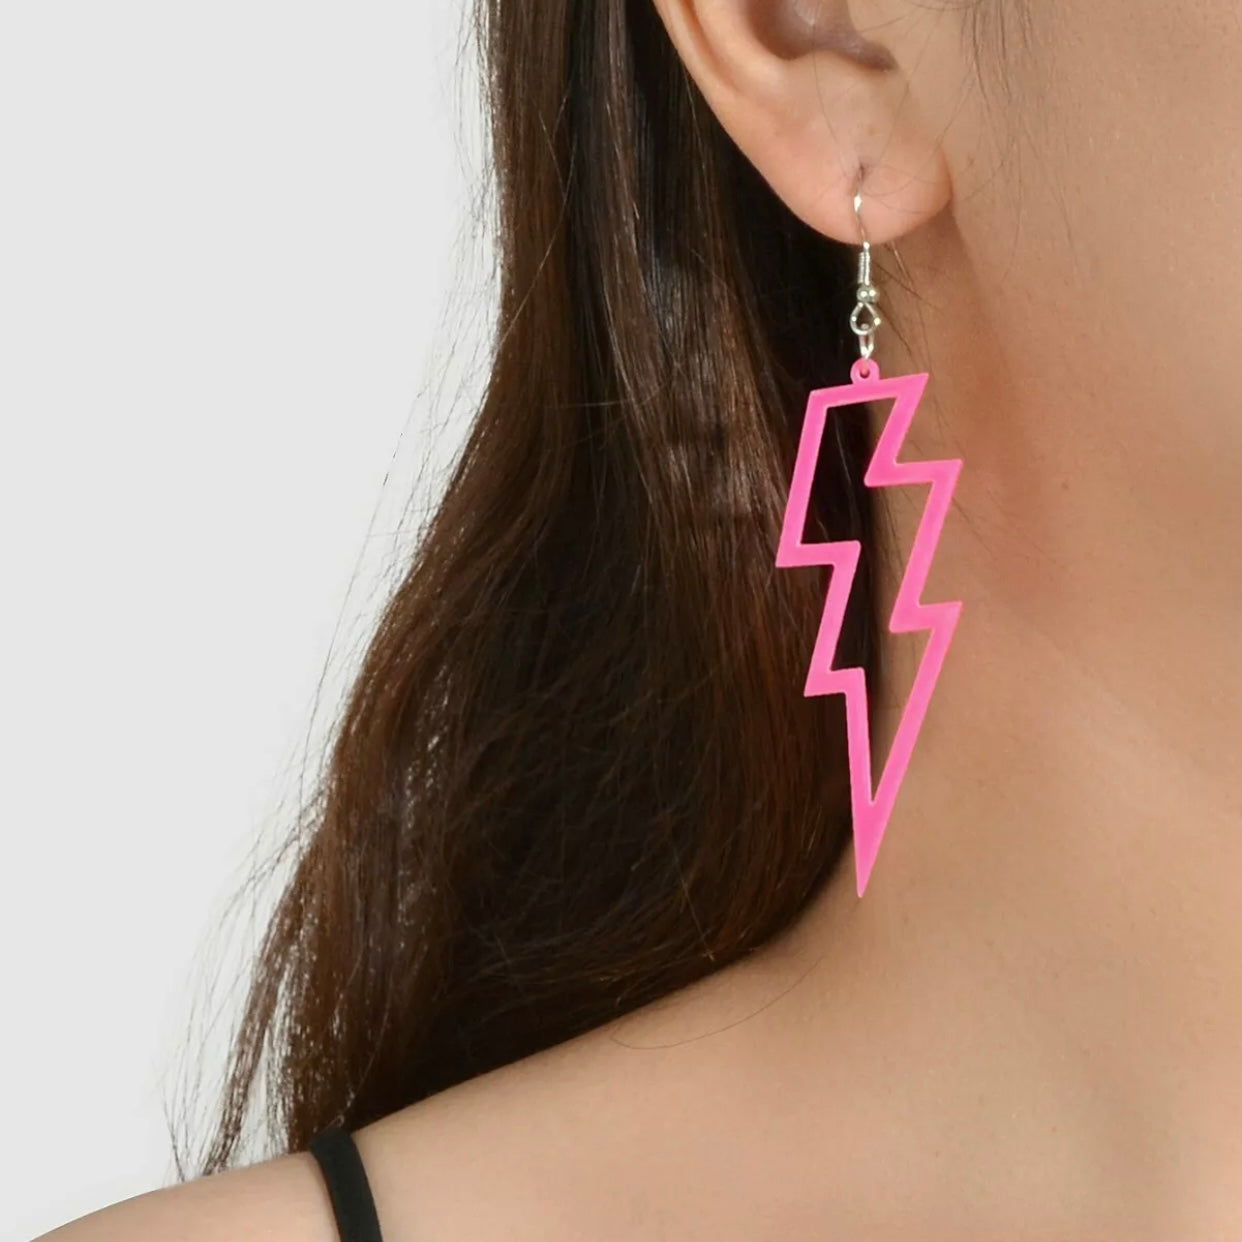 PINK ELECTRIC earrings puffnana 